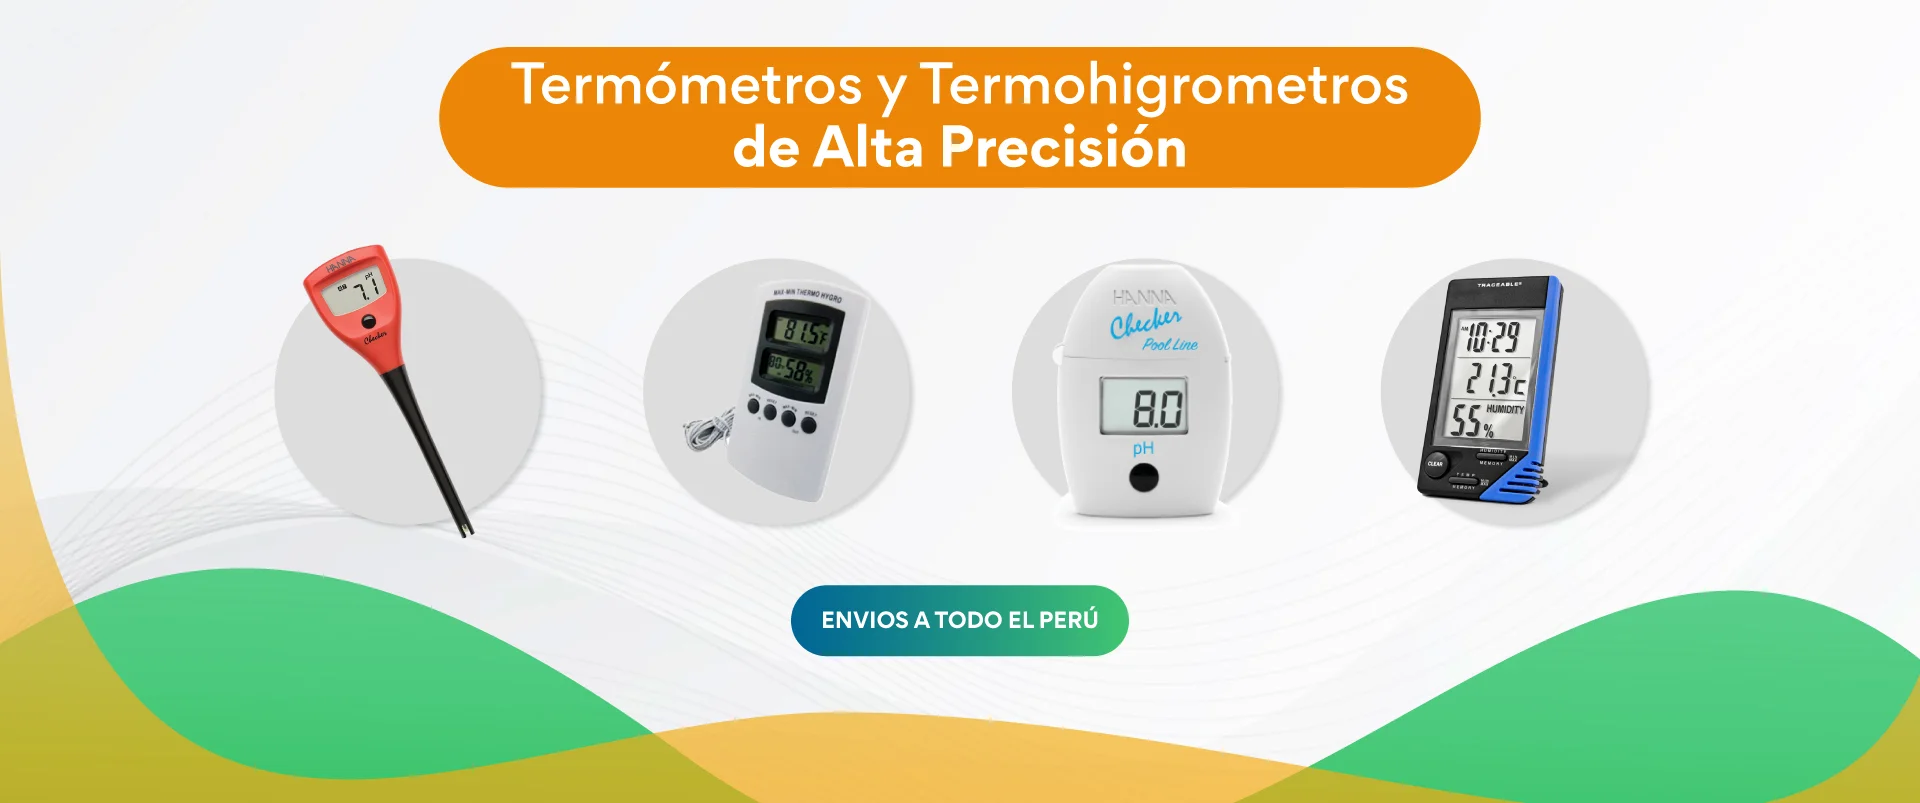 Termometros y termohigrometros de alta precision